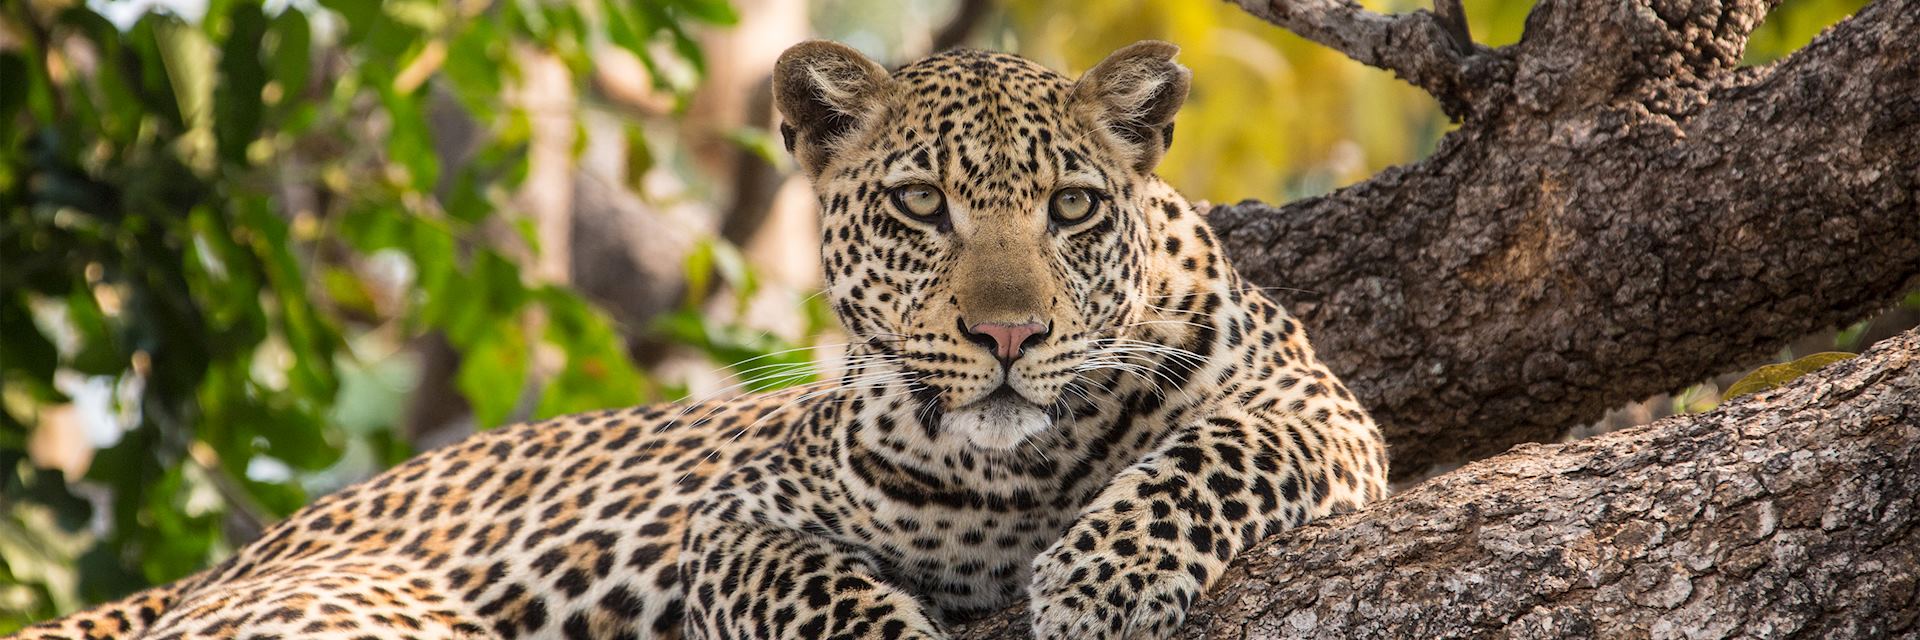 Leopard in Tanzania's Serengeti National Park